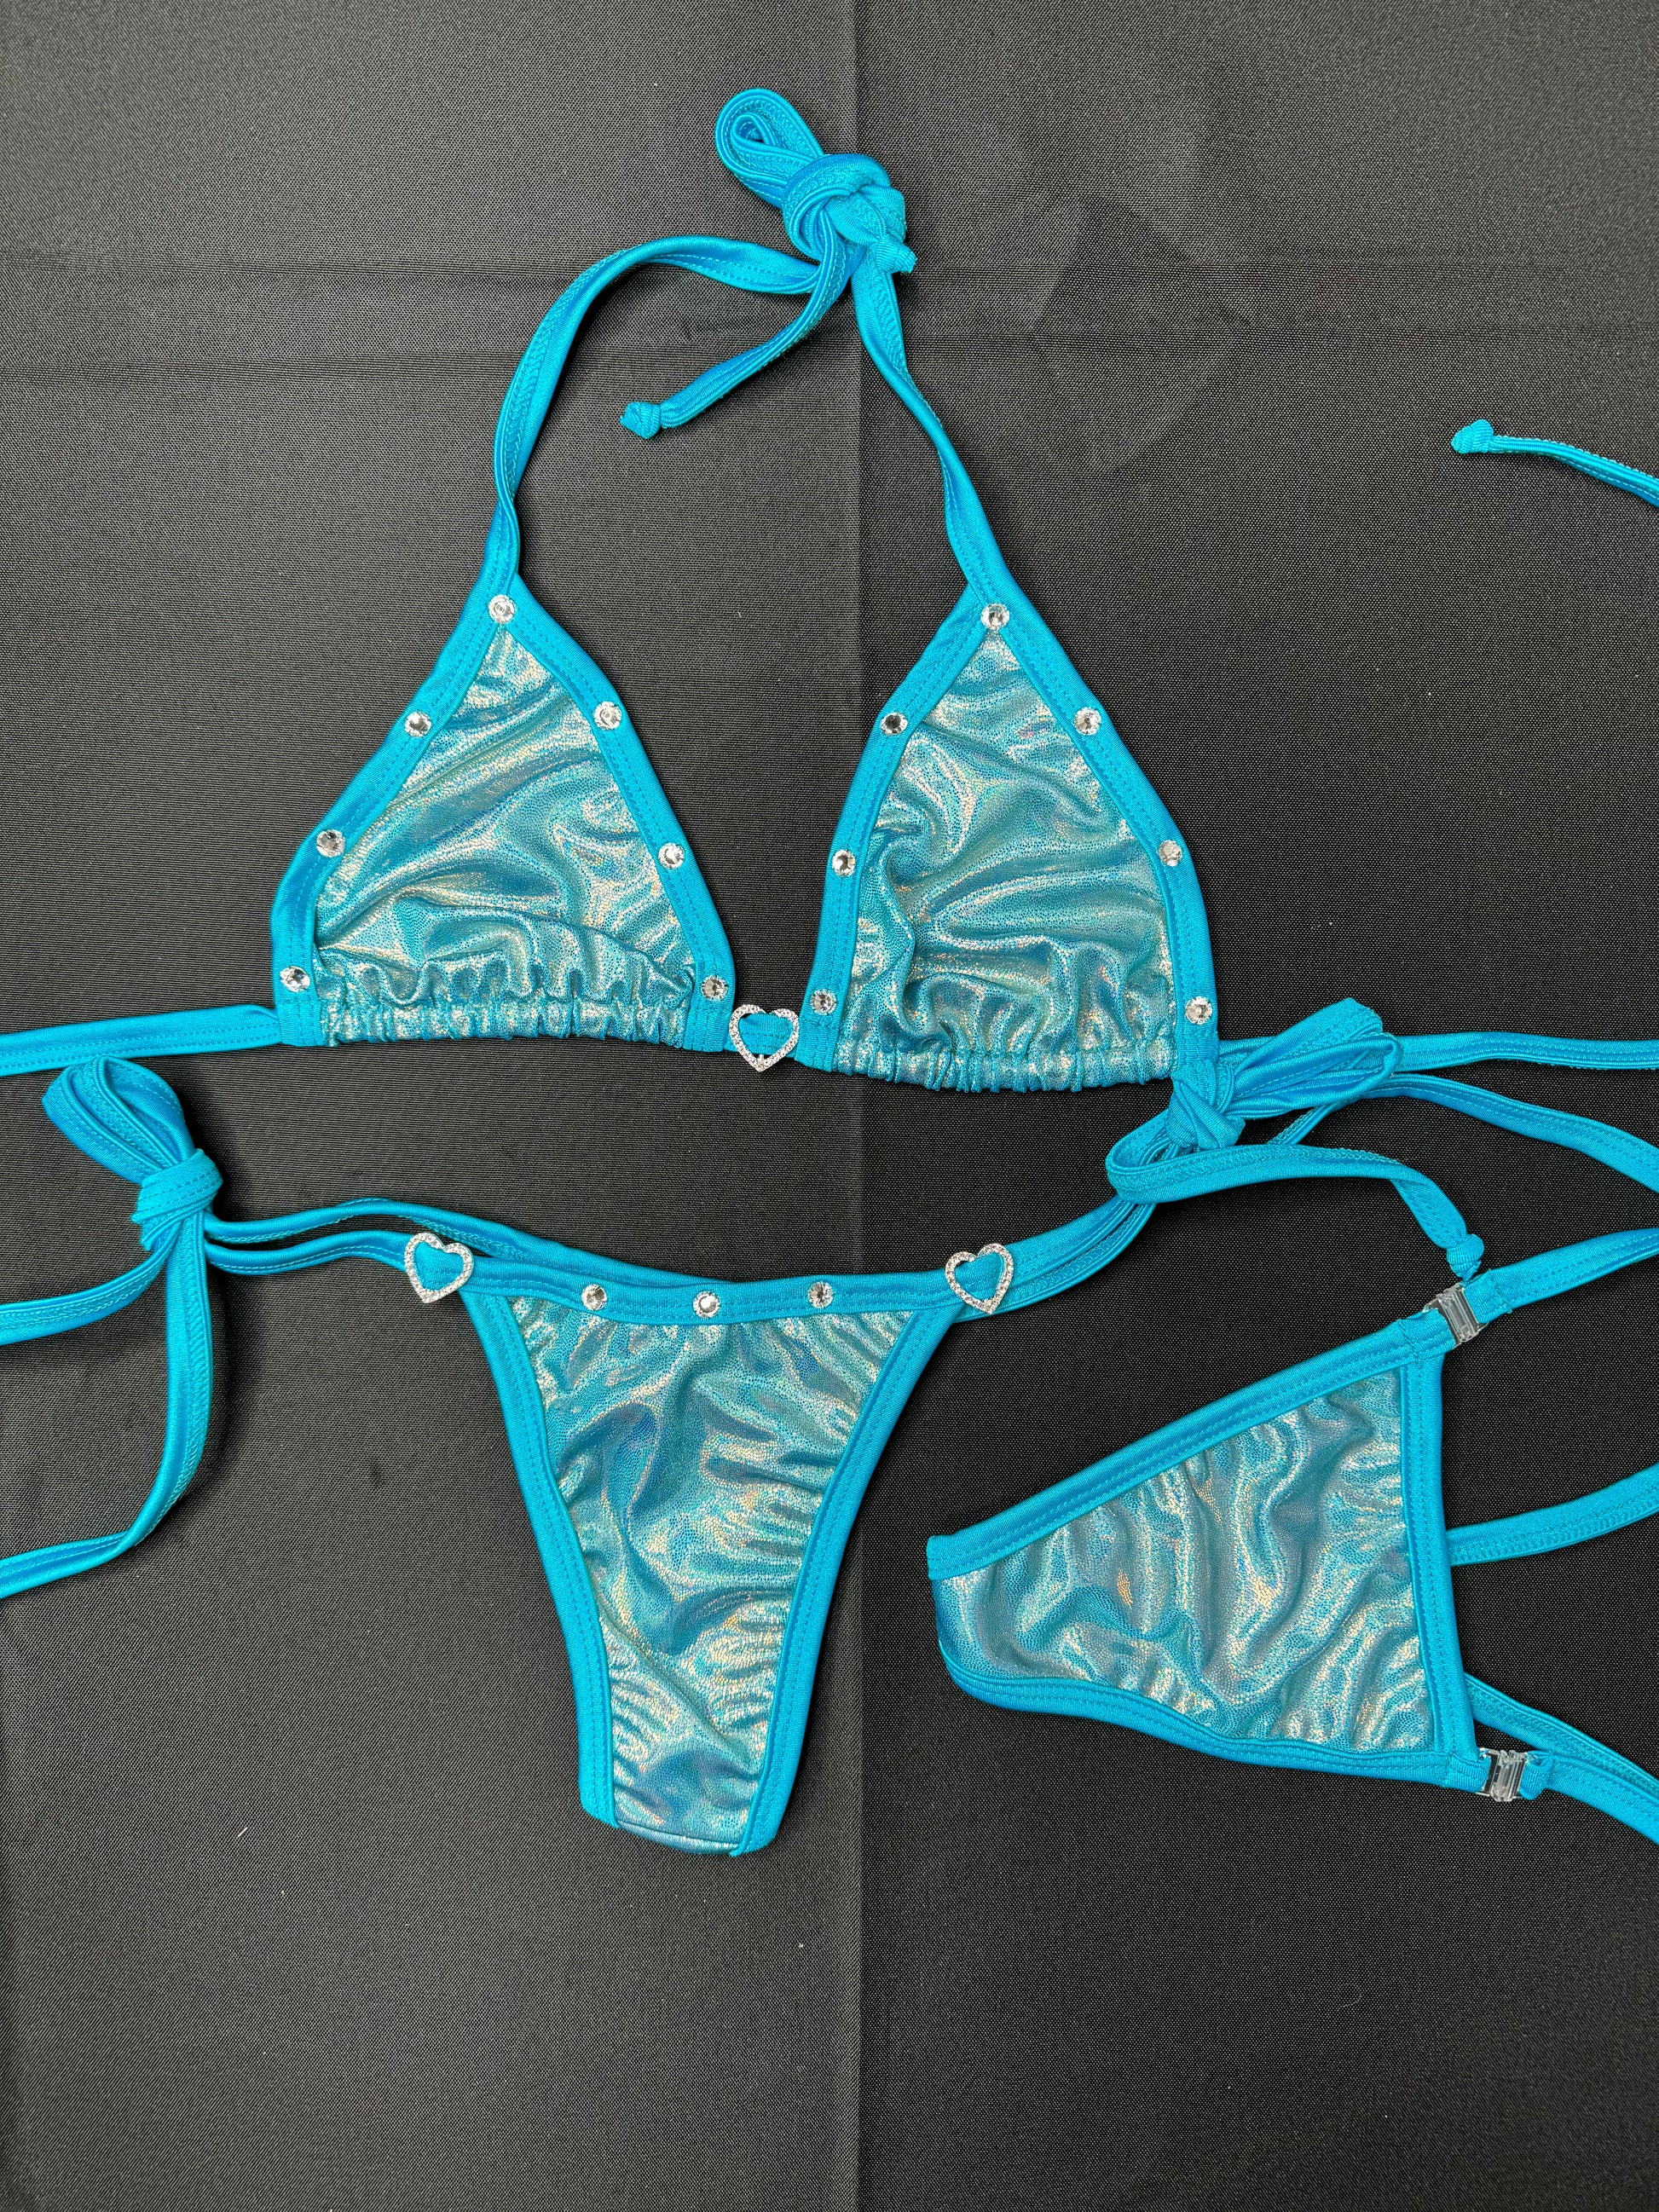 Turquoise/Metallic Blue Two-Piece Bikini Lingerie Outfit